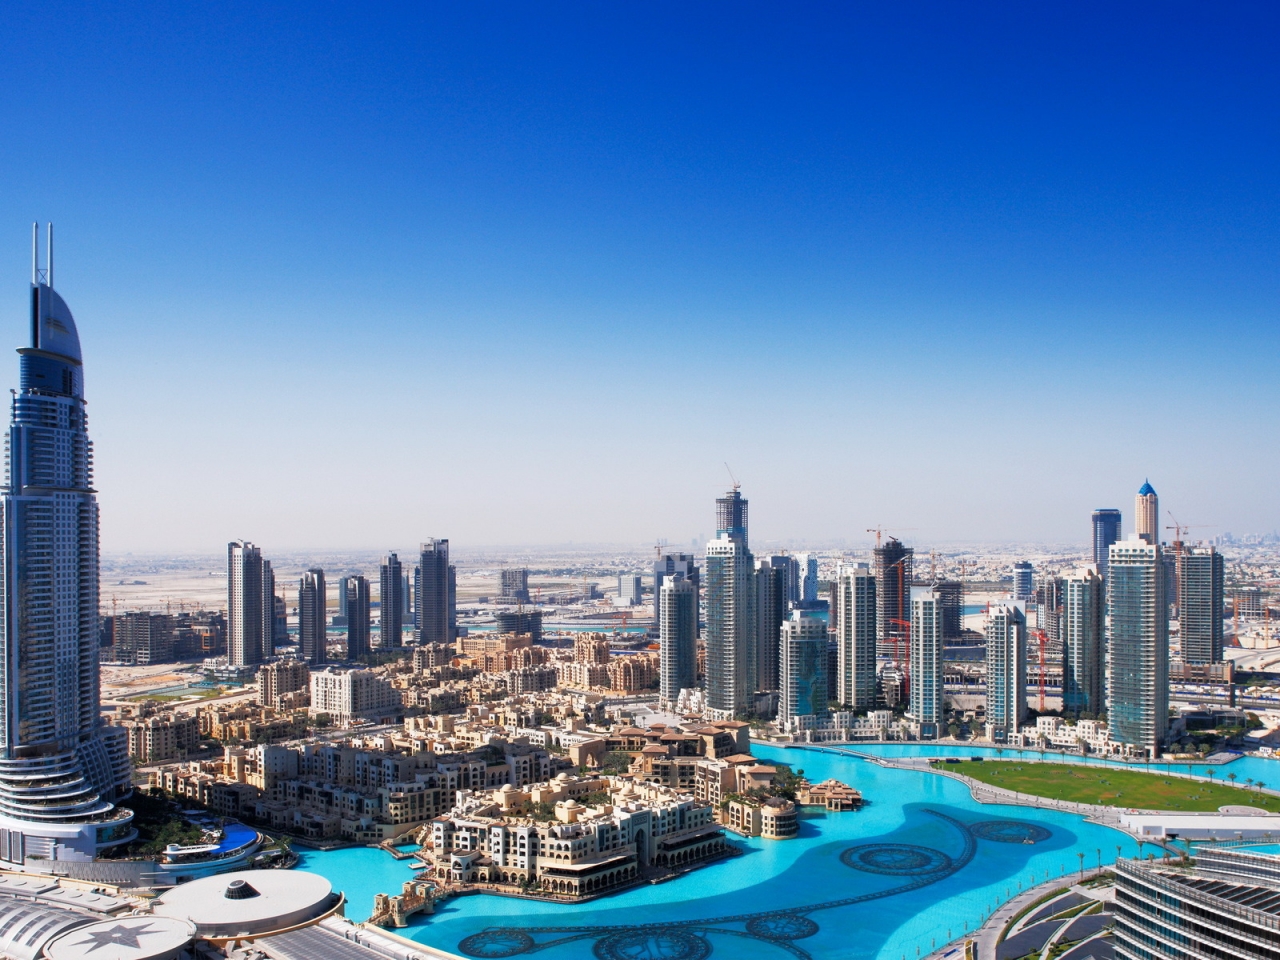 Dubai Overview for 1280 x 960 resolution